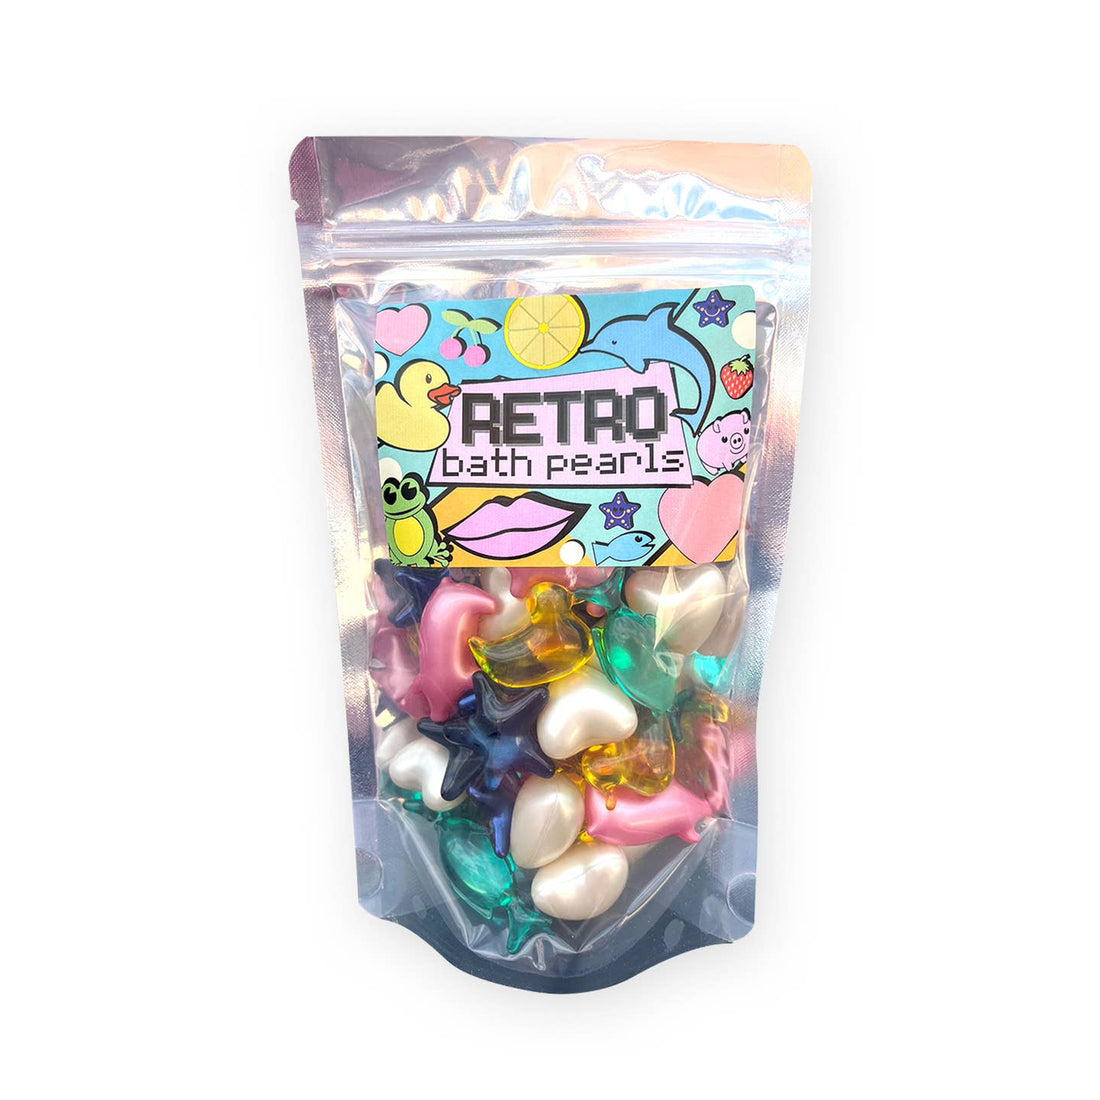 Retro Bath Pearls - Pack of 30